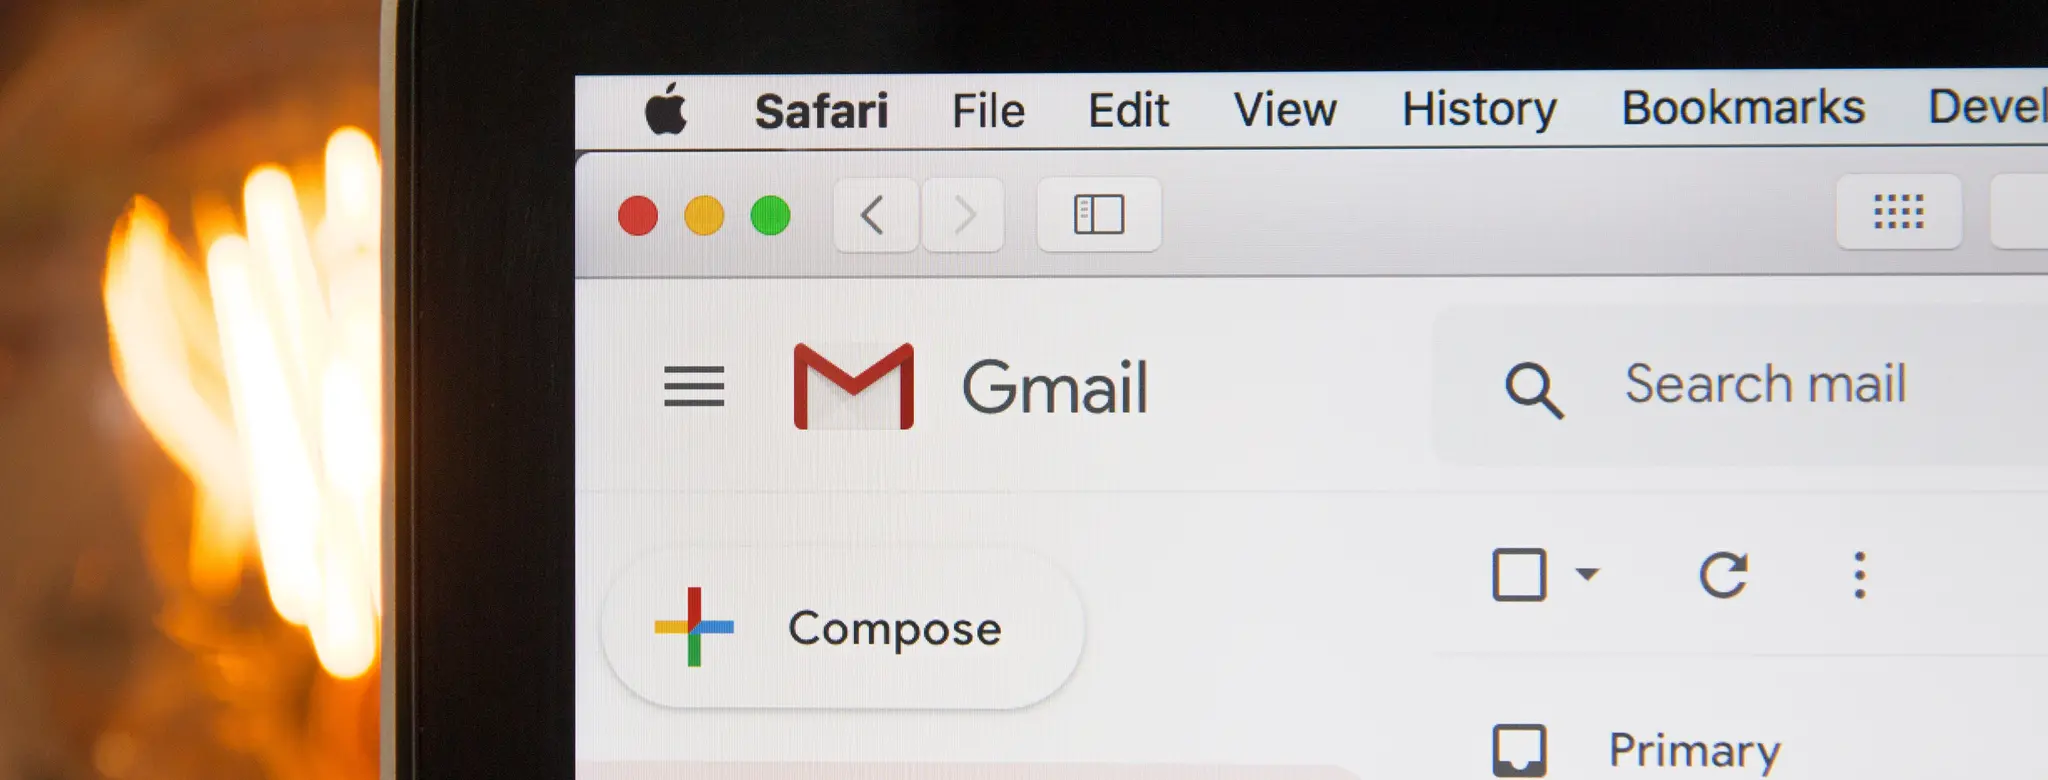 image of gmail on safari